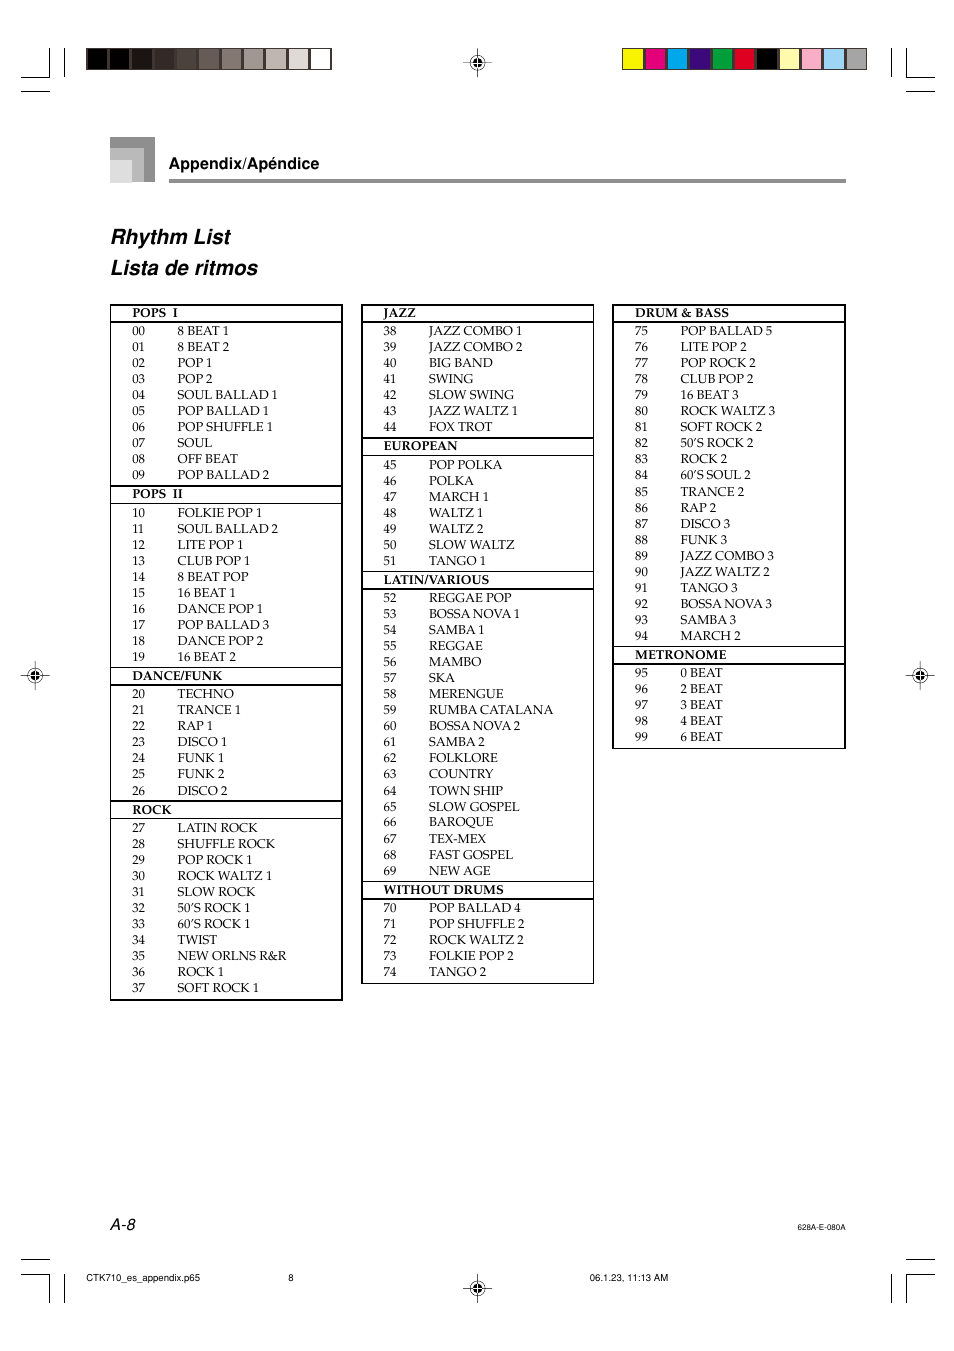 Rhythm list lista de ritmos, A-8 appendix/apéndice | Casio CTK710 User  Manual | Page 44 / 48 | Original mode